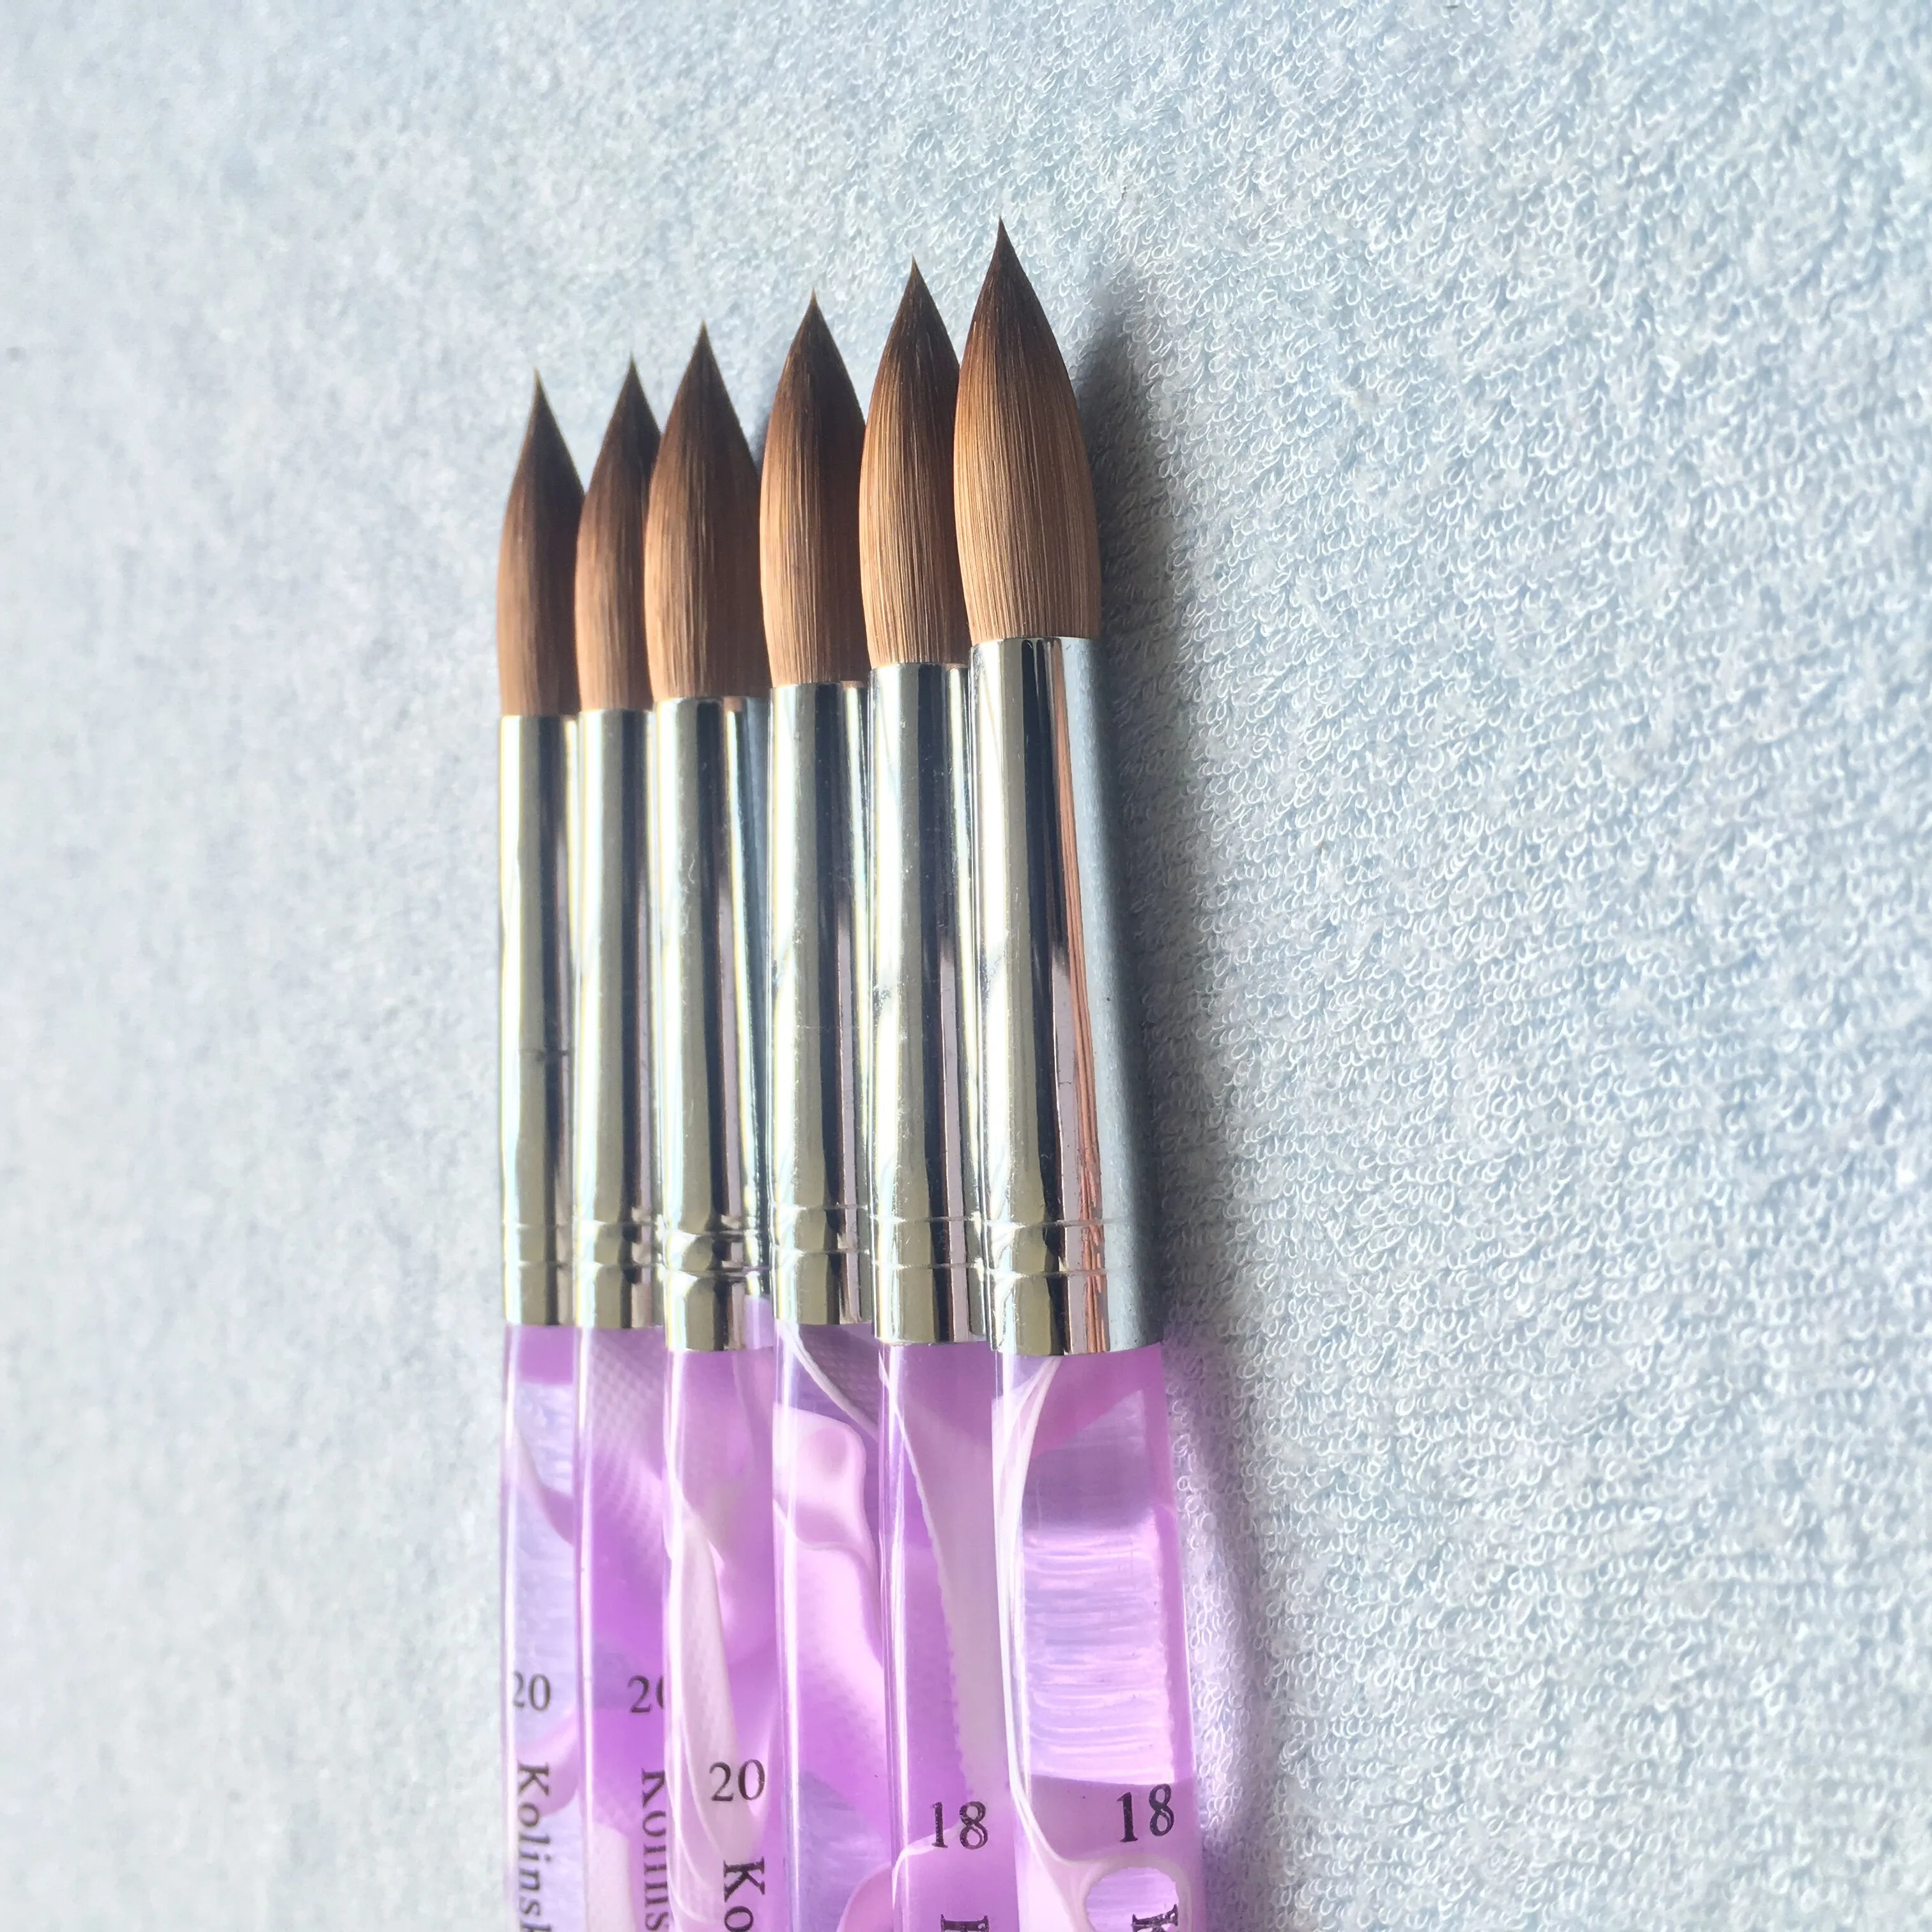 Acrylic Nail Art Drawing Brush Big Size24 Kolinsky Painting Sable Free Shipping Pink Handle Round Sharp For Manicure Salon Use